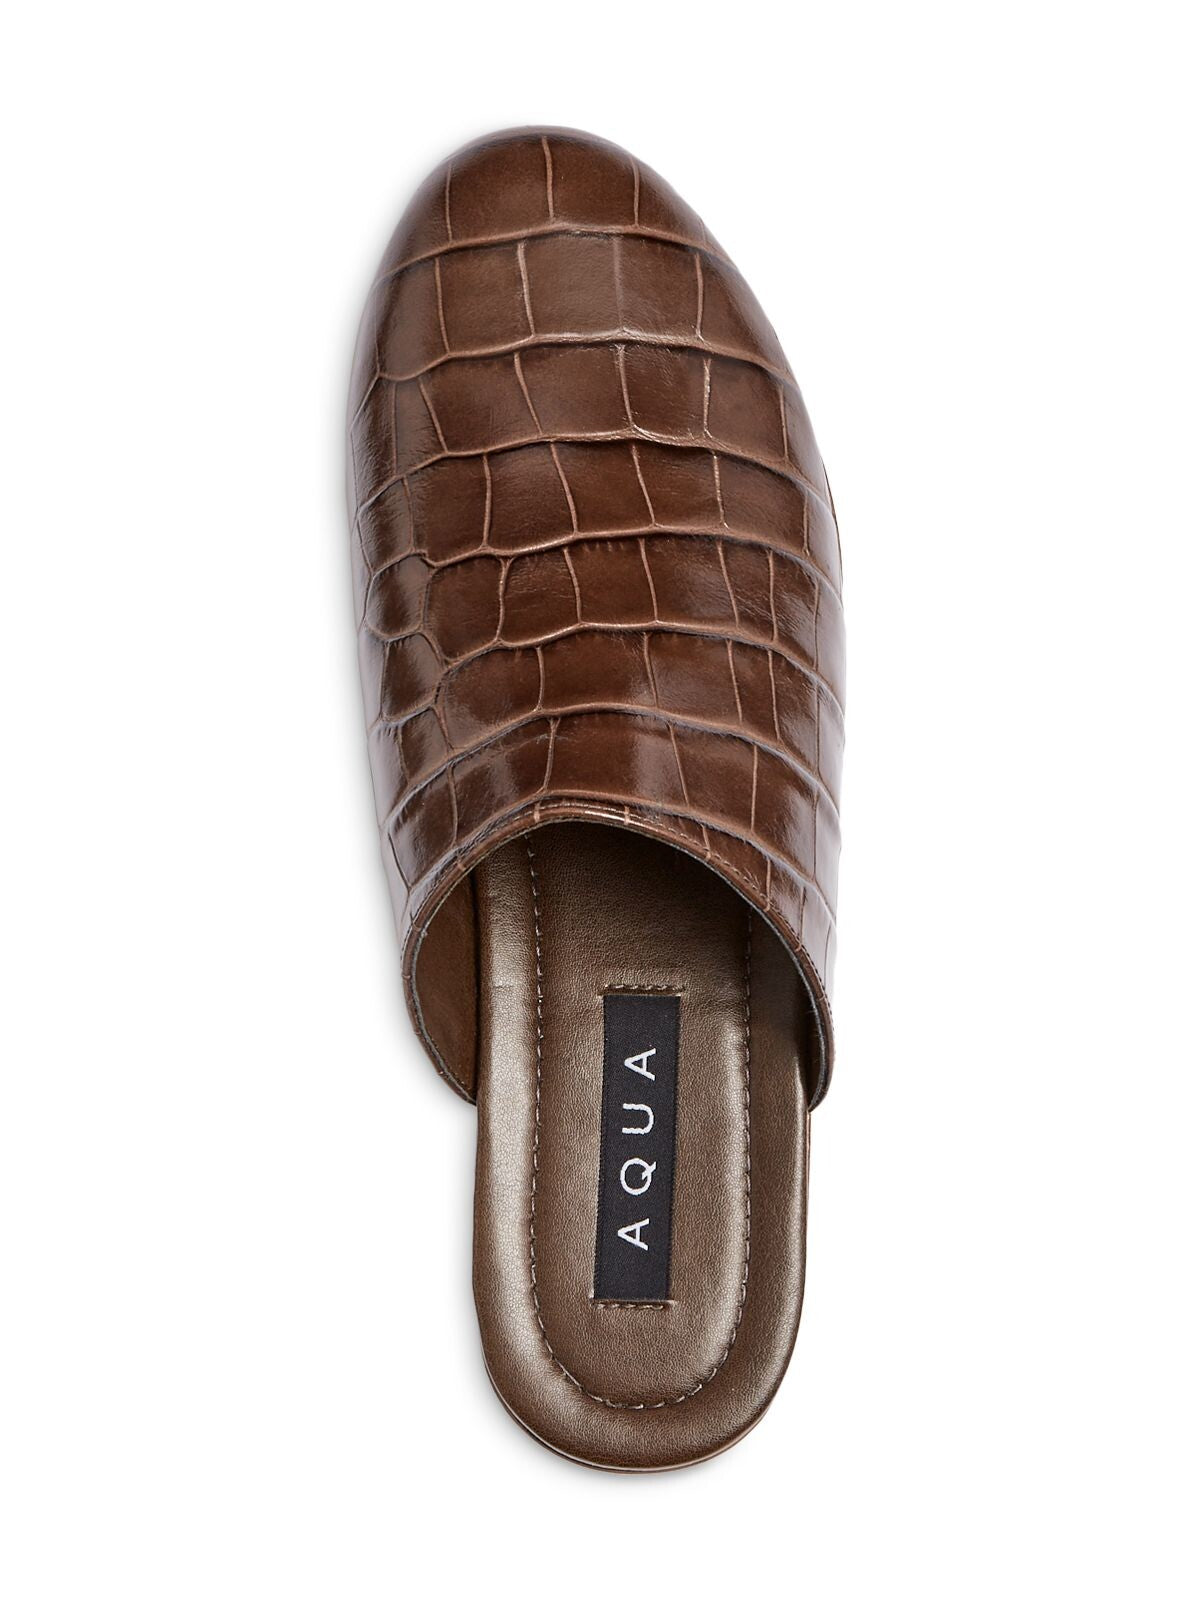 AQUA Womens Brown Crocodile Comfort Round Toe Block Heel Slip On Leather Clogs Shoes 7.5